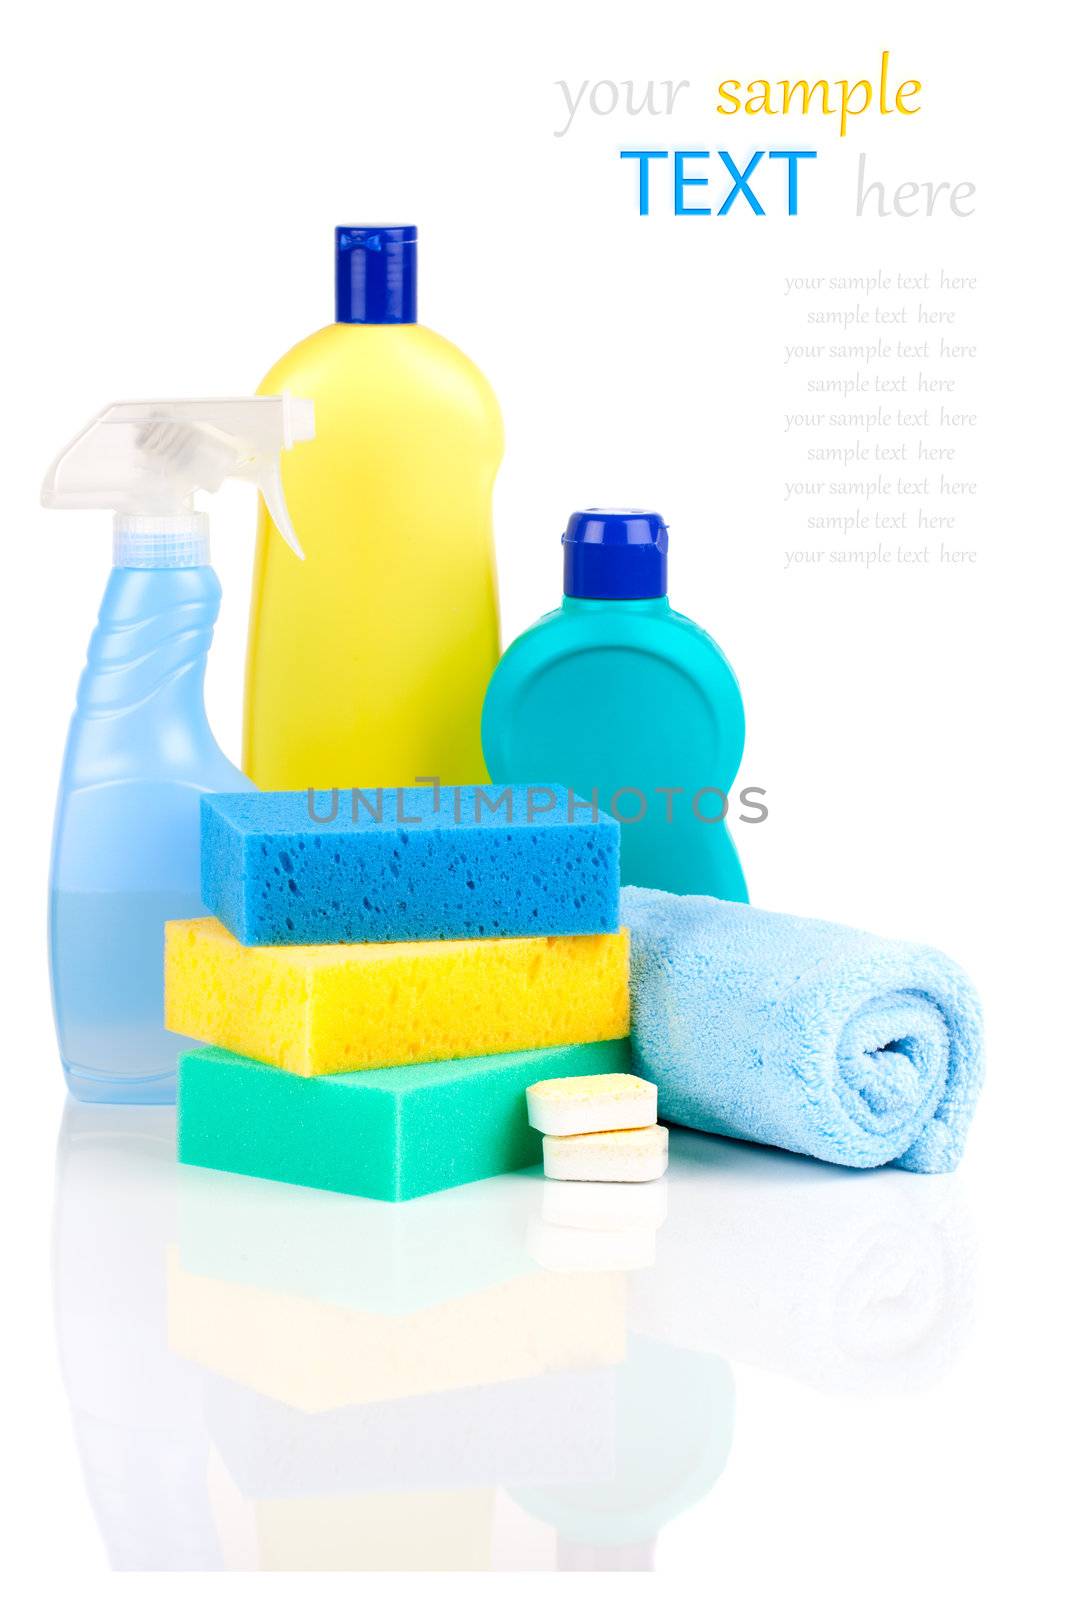 Plastic detergent bottles with sponges by motorolka